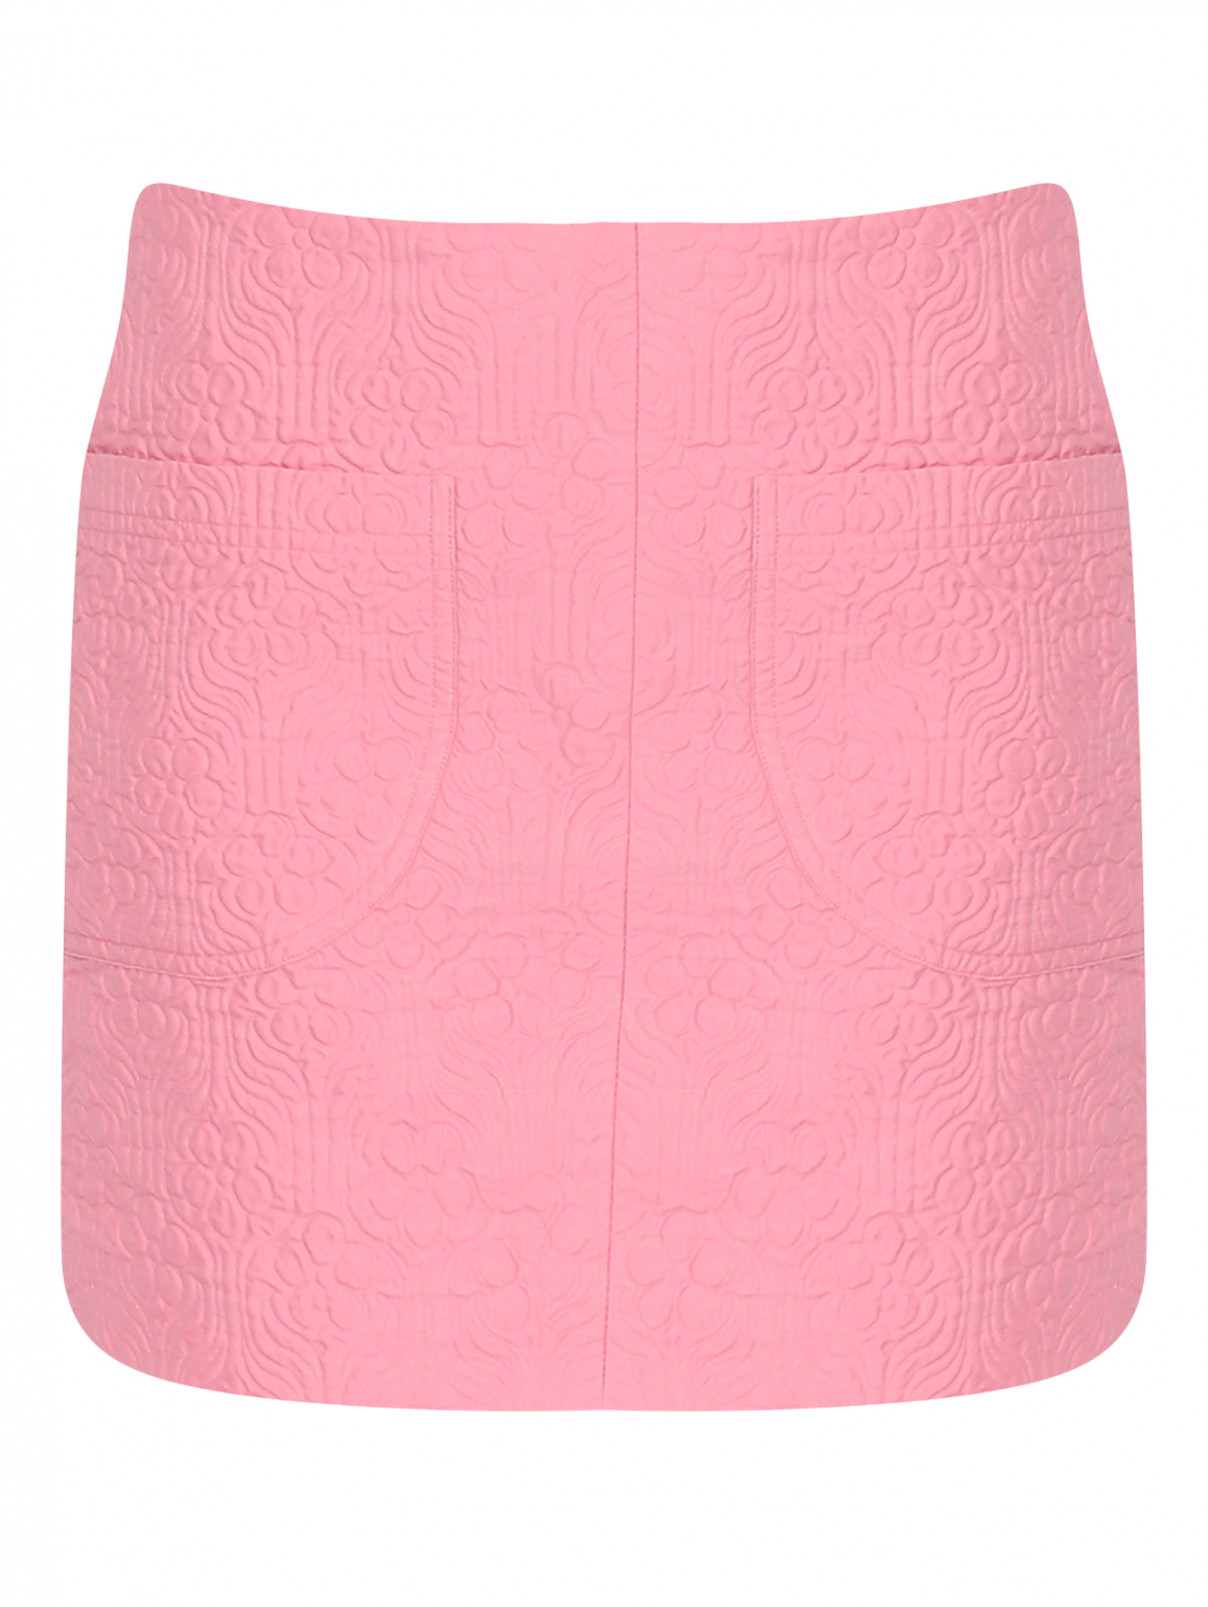 Юбка-мини с карманами Rohe  –  Общий вид  – Цвет:  Розовый